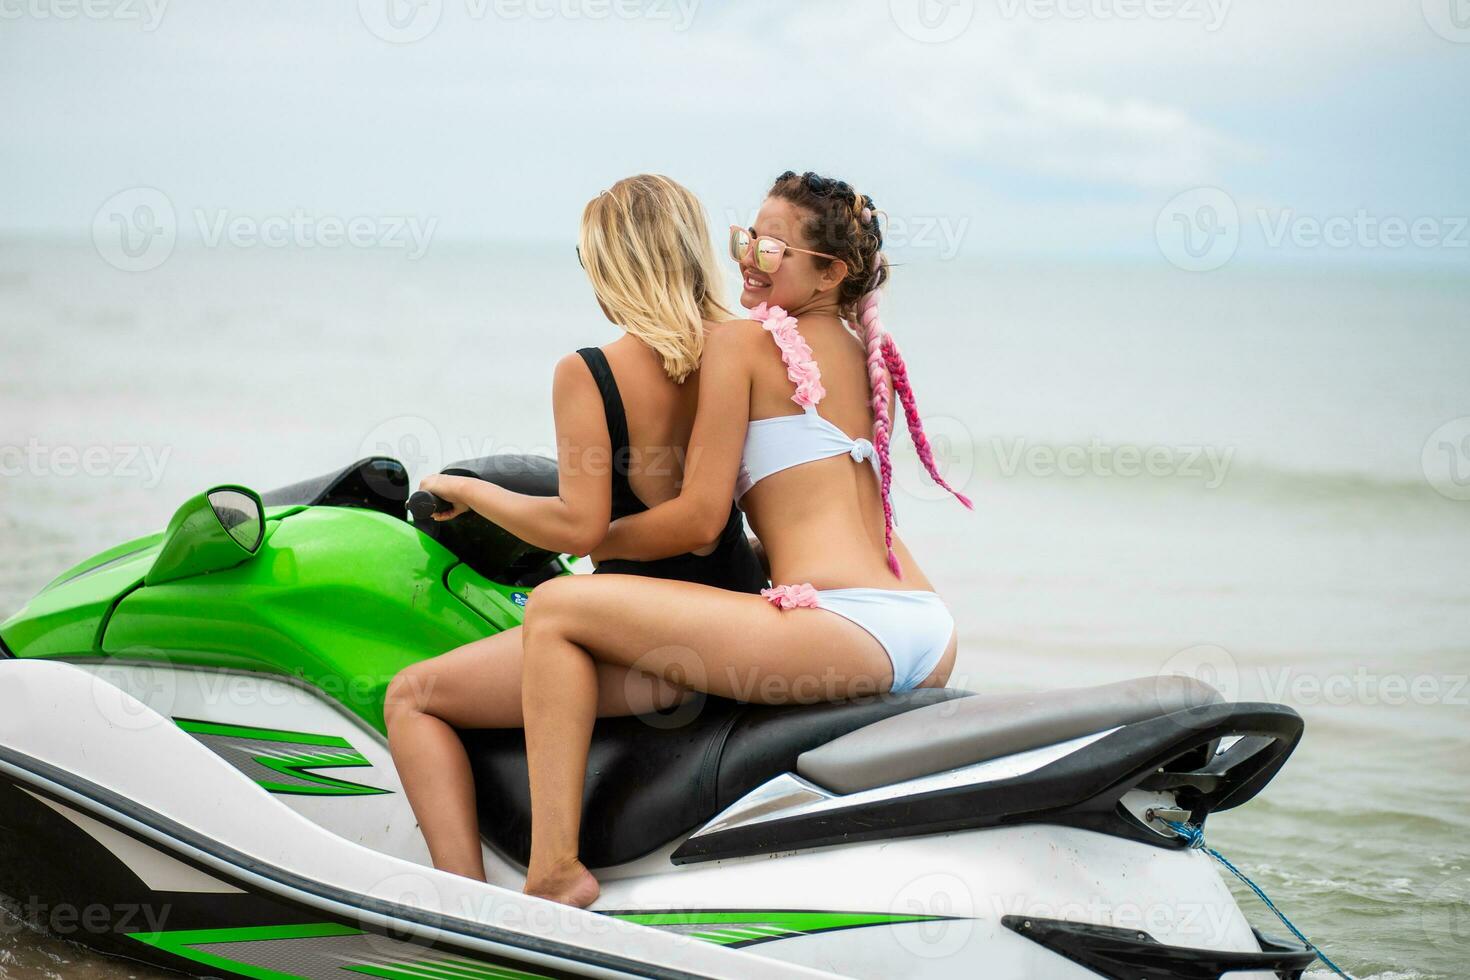 two sexy women in bikini on water scooter in sea summer style photo